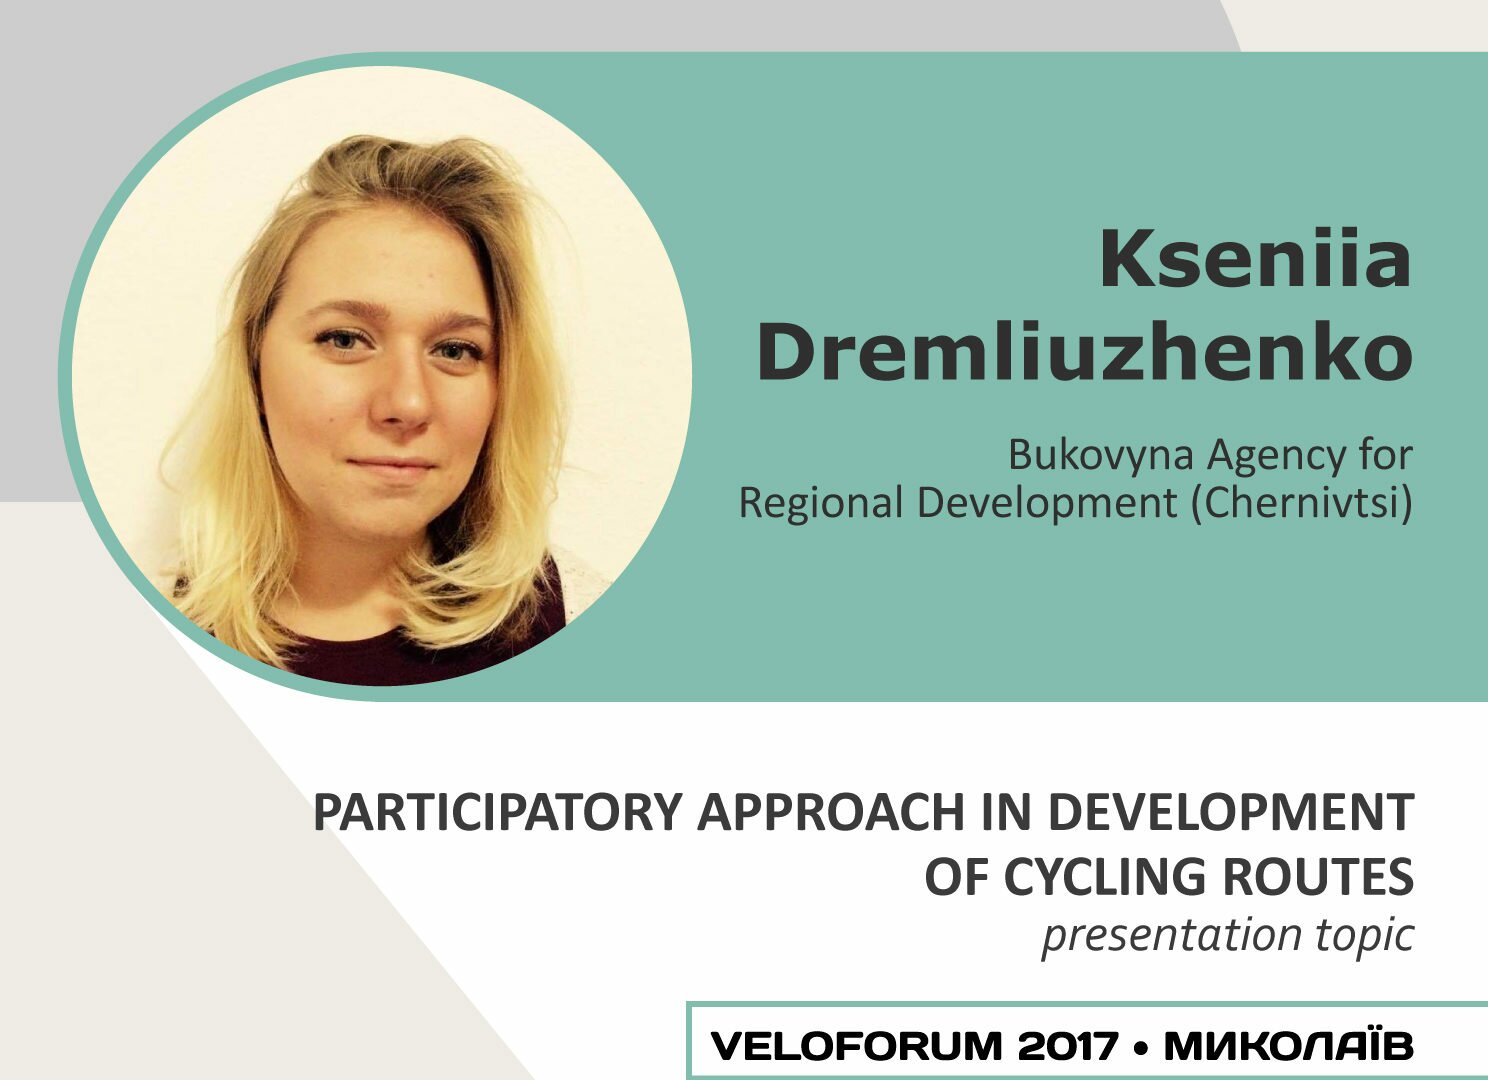 VELOFORUM 2017 SPEAKERS. Kseniia Dremliuzhenko